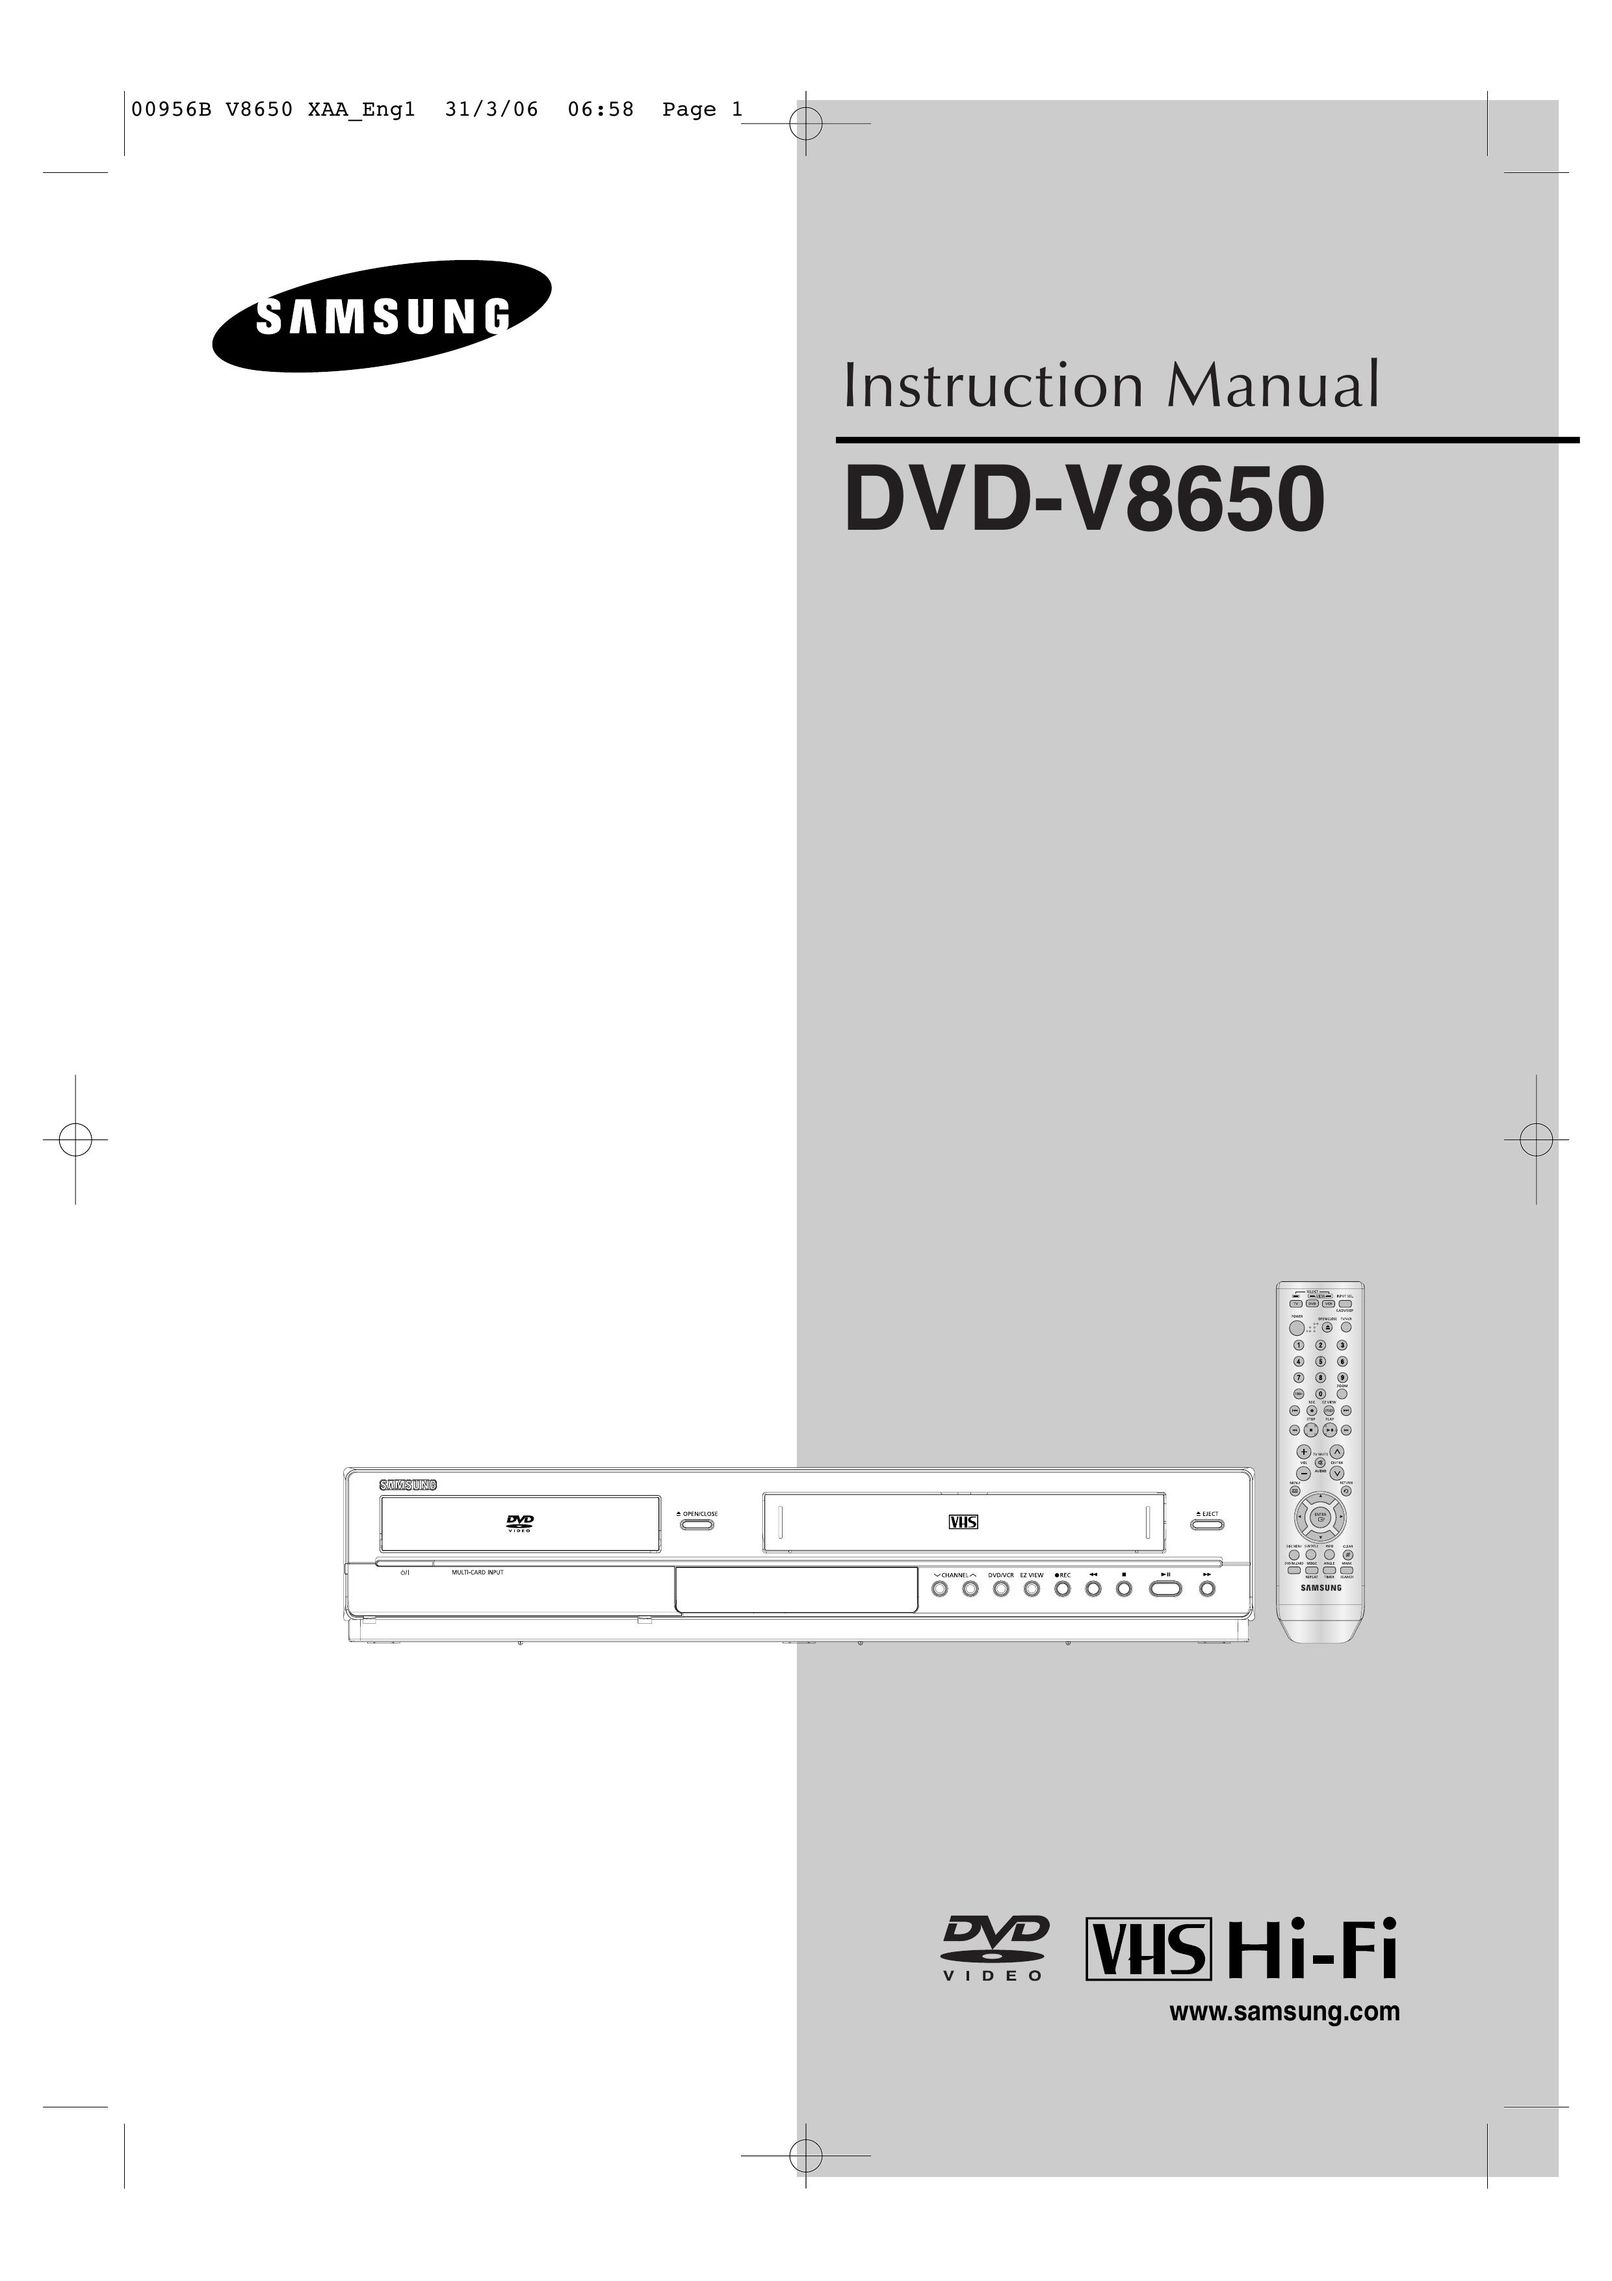 Samsung DVD-V8650 MP3 Player User Manual